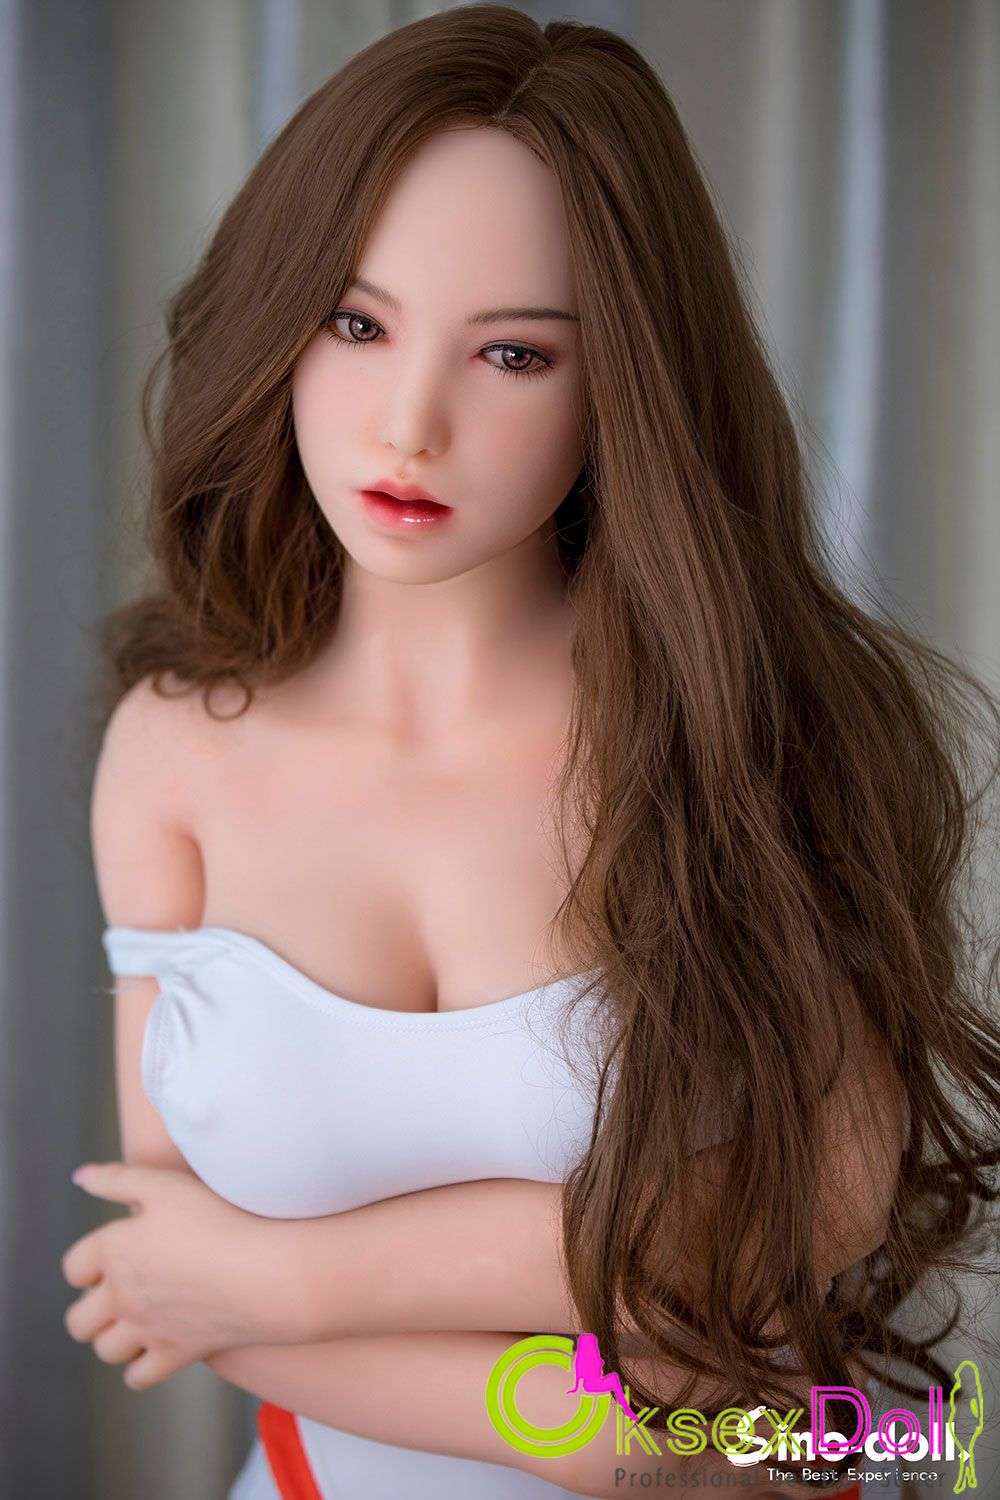 realistic adult sex dolls Photos